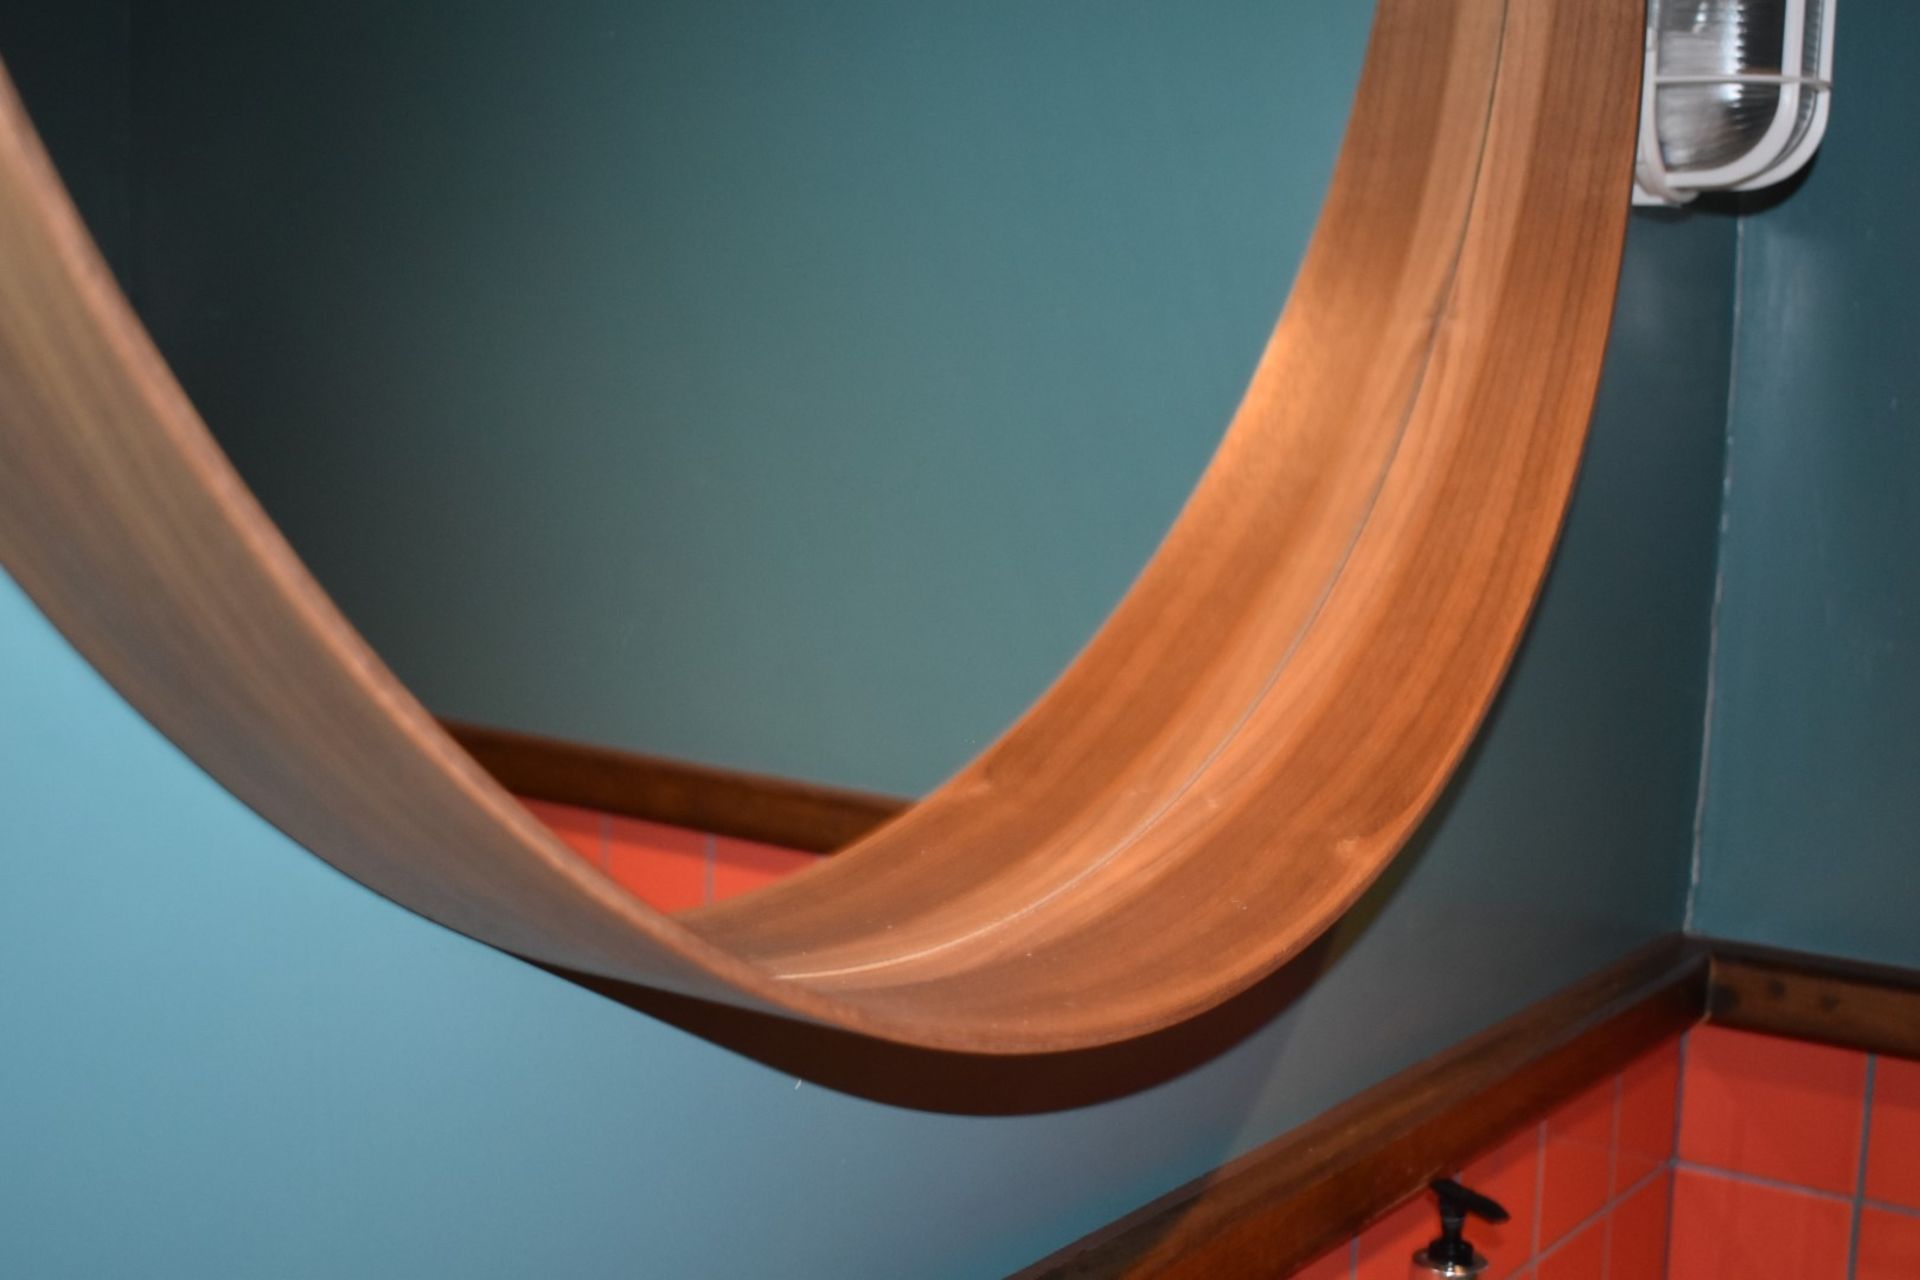 1 x Contemporary Wall Mirror - Circular Design With Walnut Surround - 80cm Diameter - Ref: RB151 - - Image 3 of 3